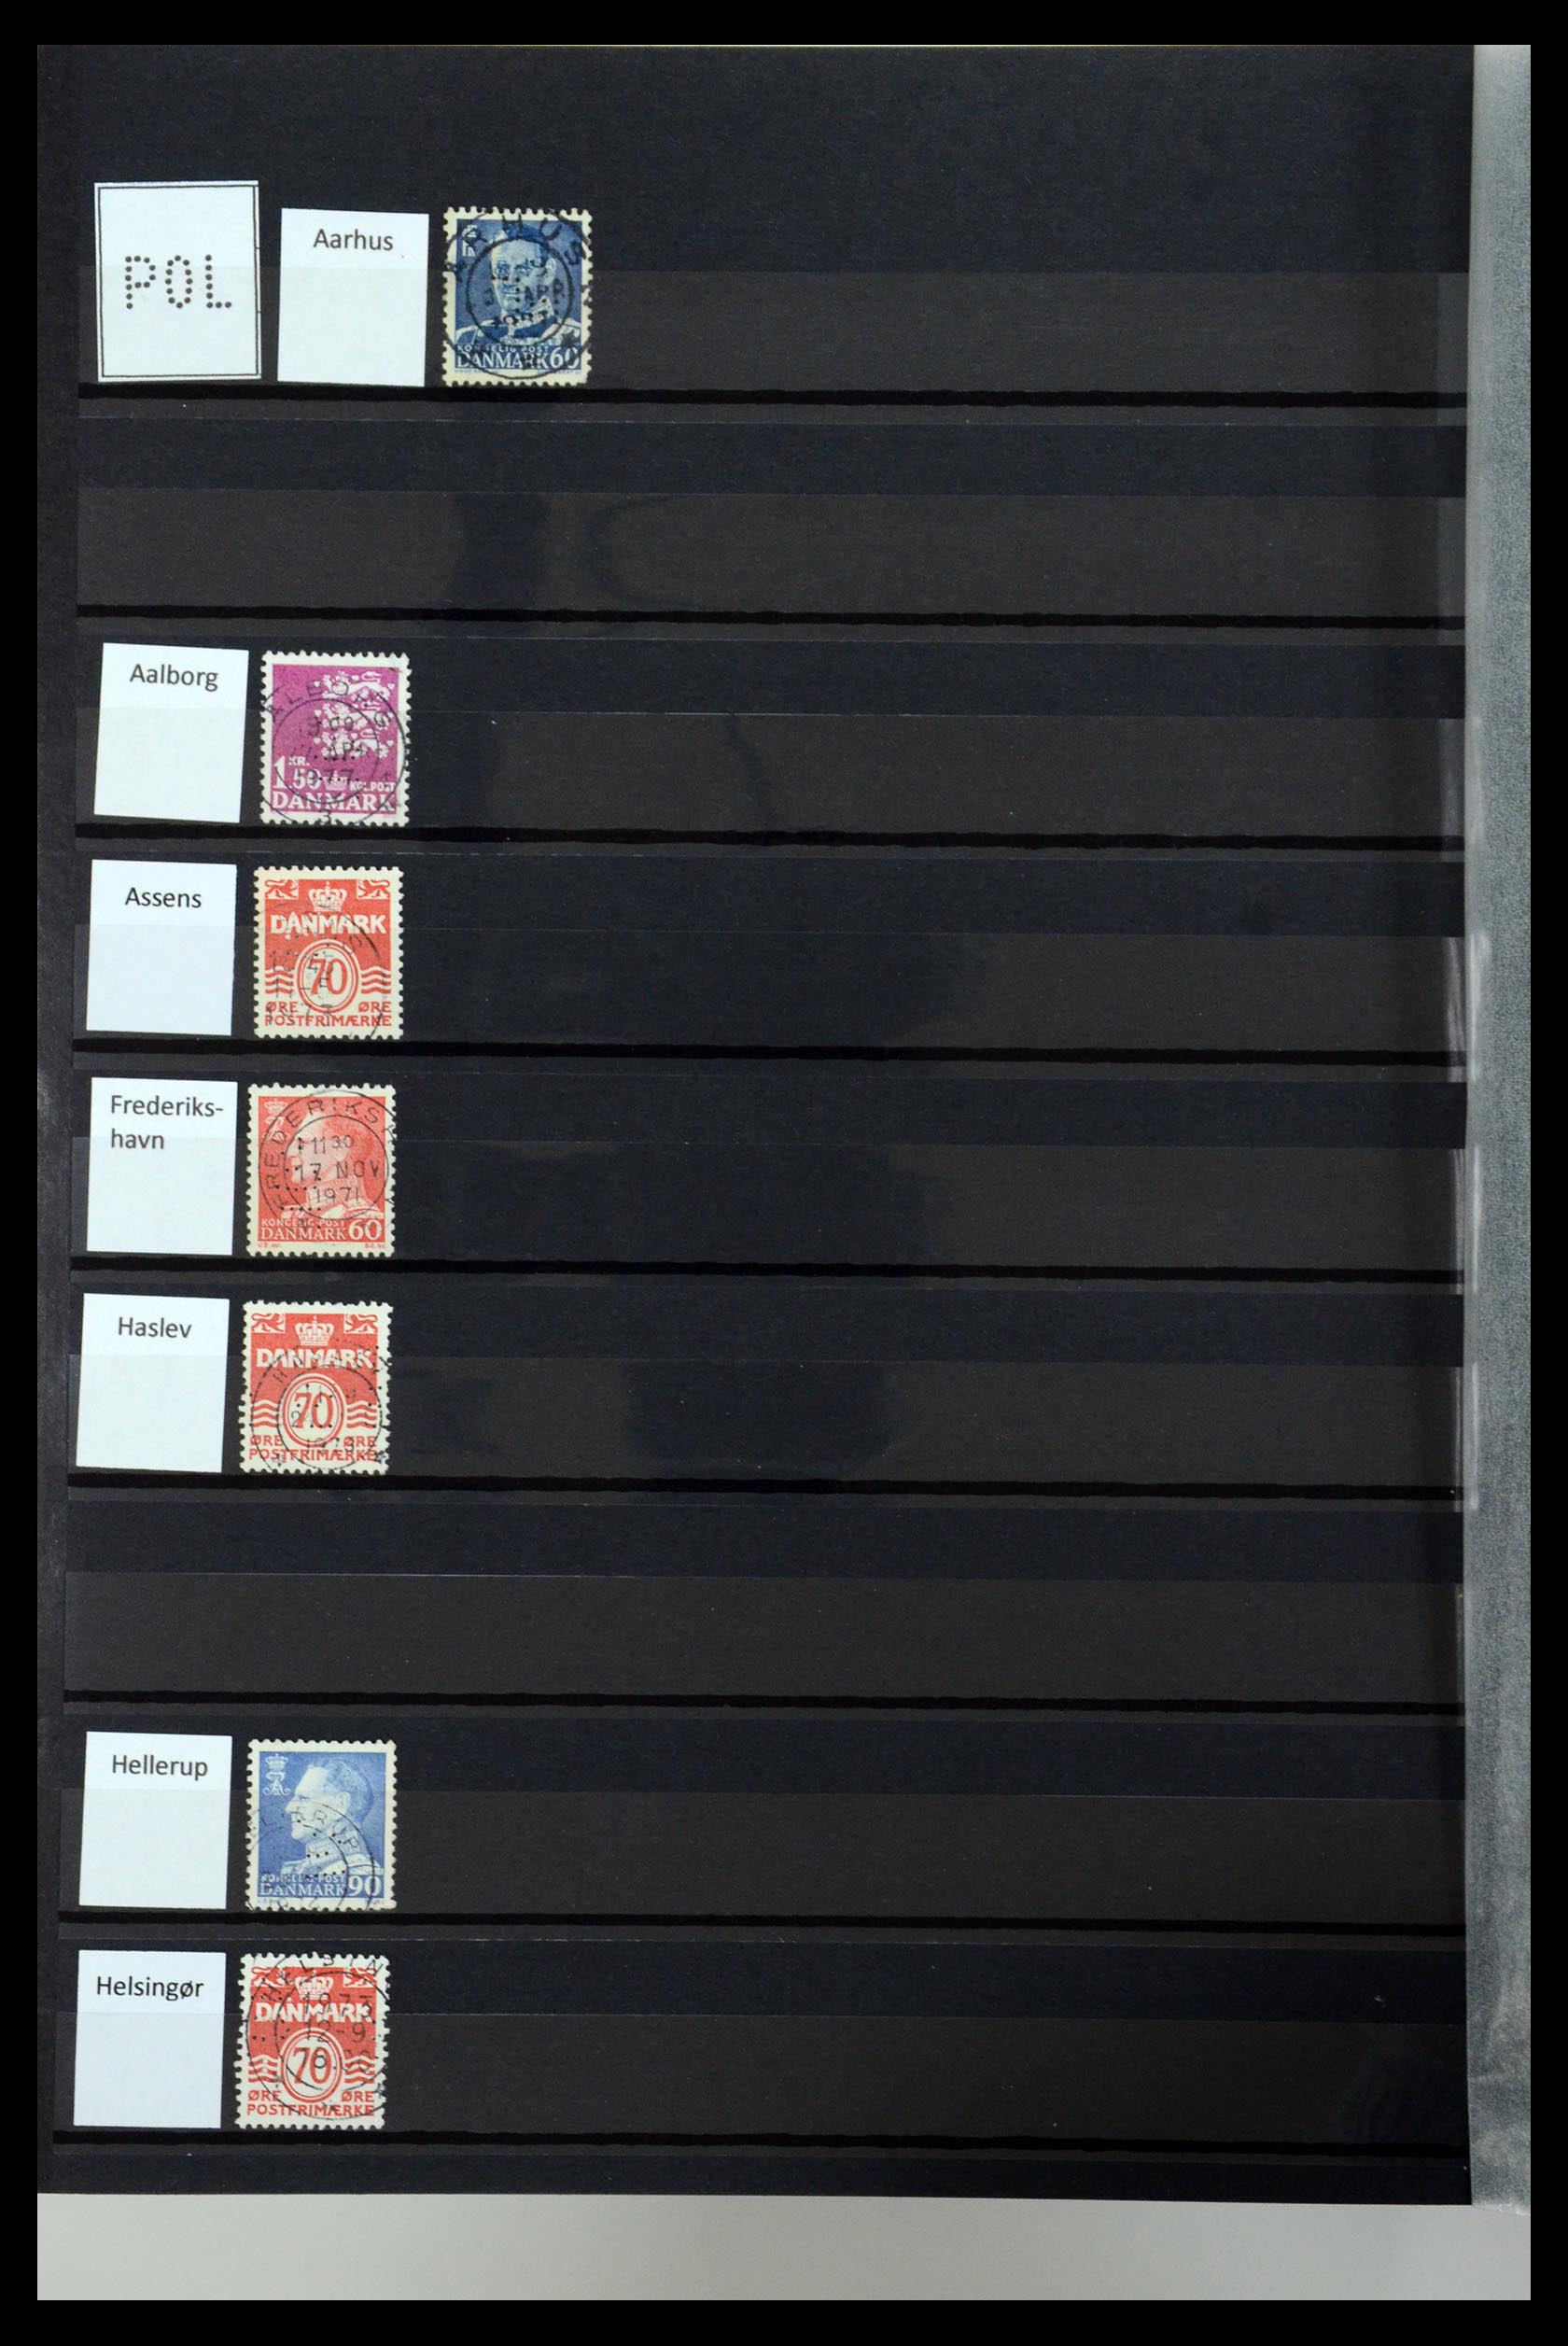 36396 101 - Stamp collection 36396 Denmark perfins.